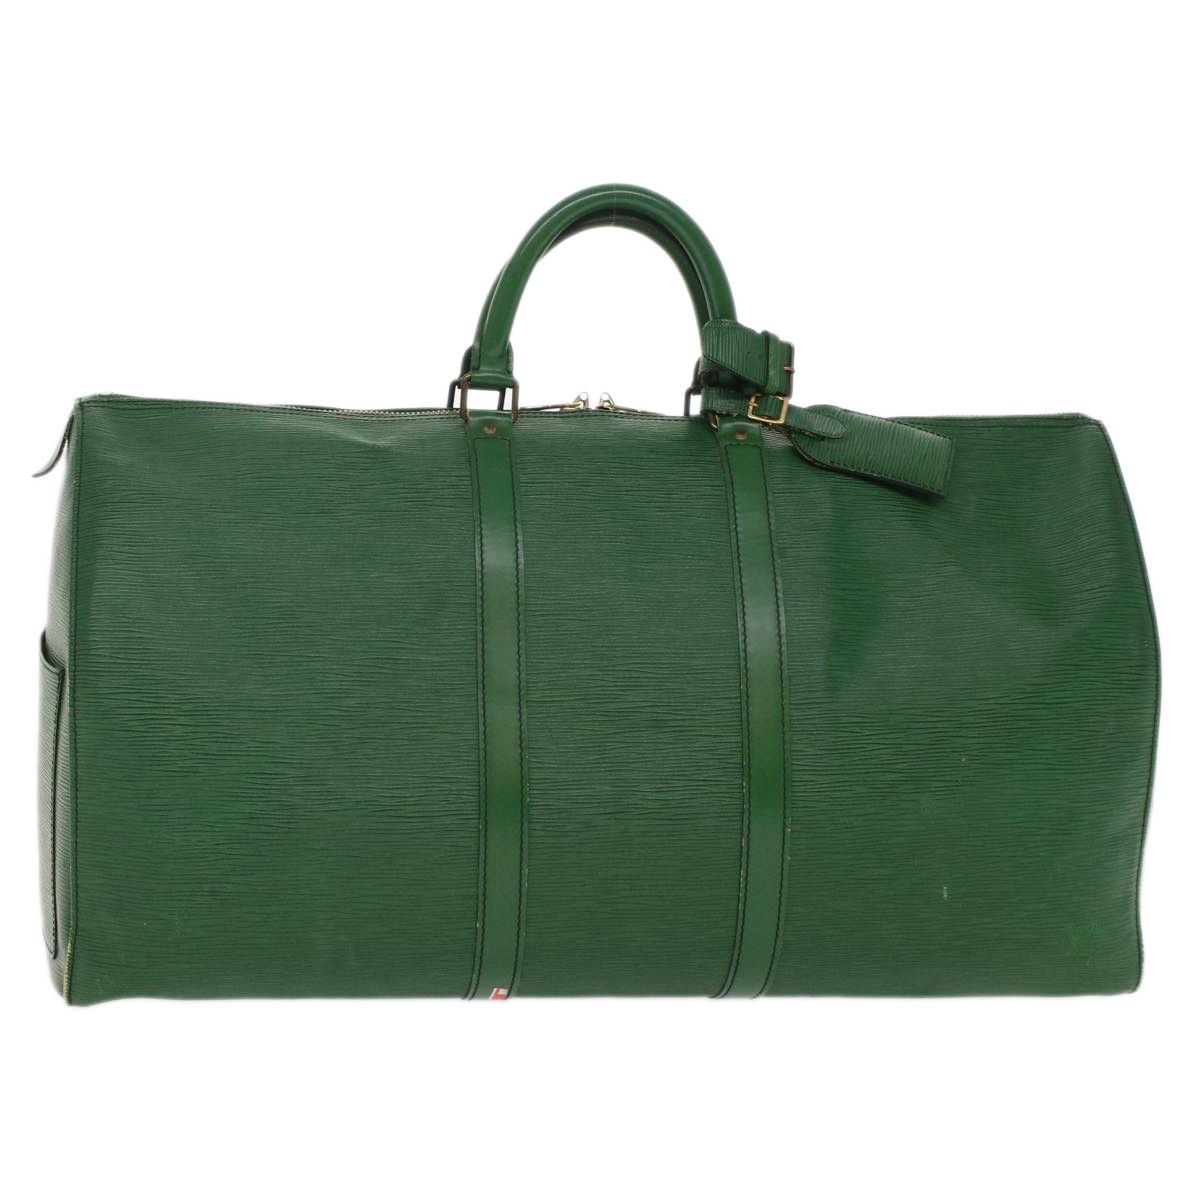 LOUIS VUITTON Boston bag M42954 Keepall 55 Epi Leather green green